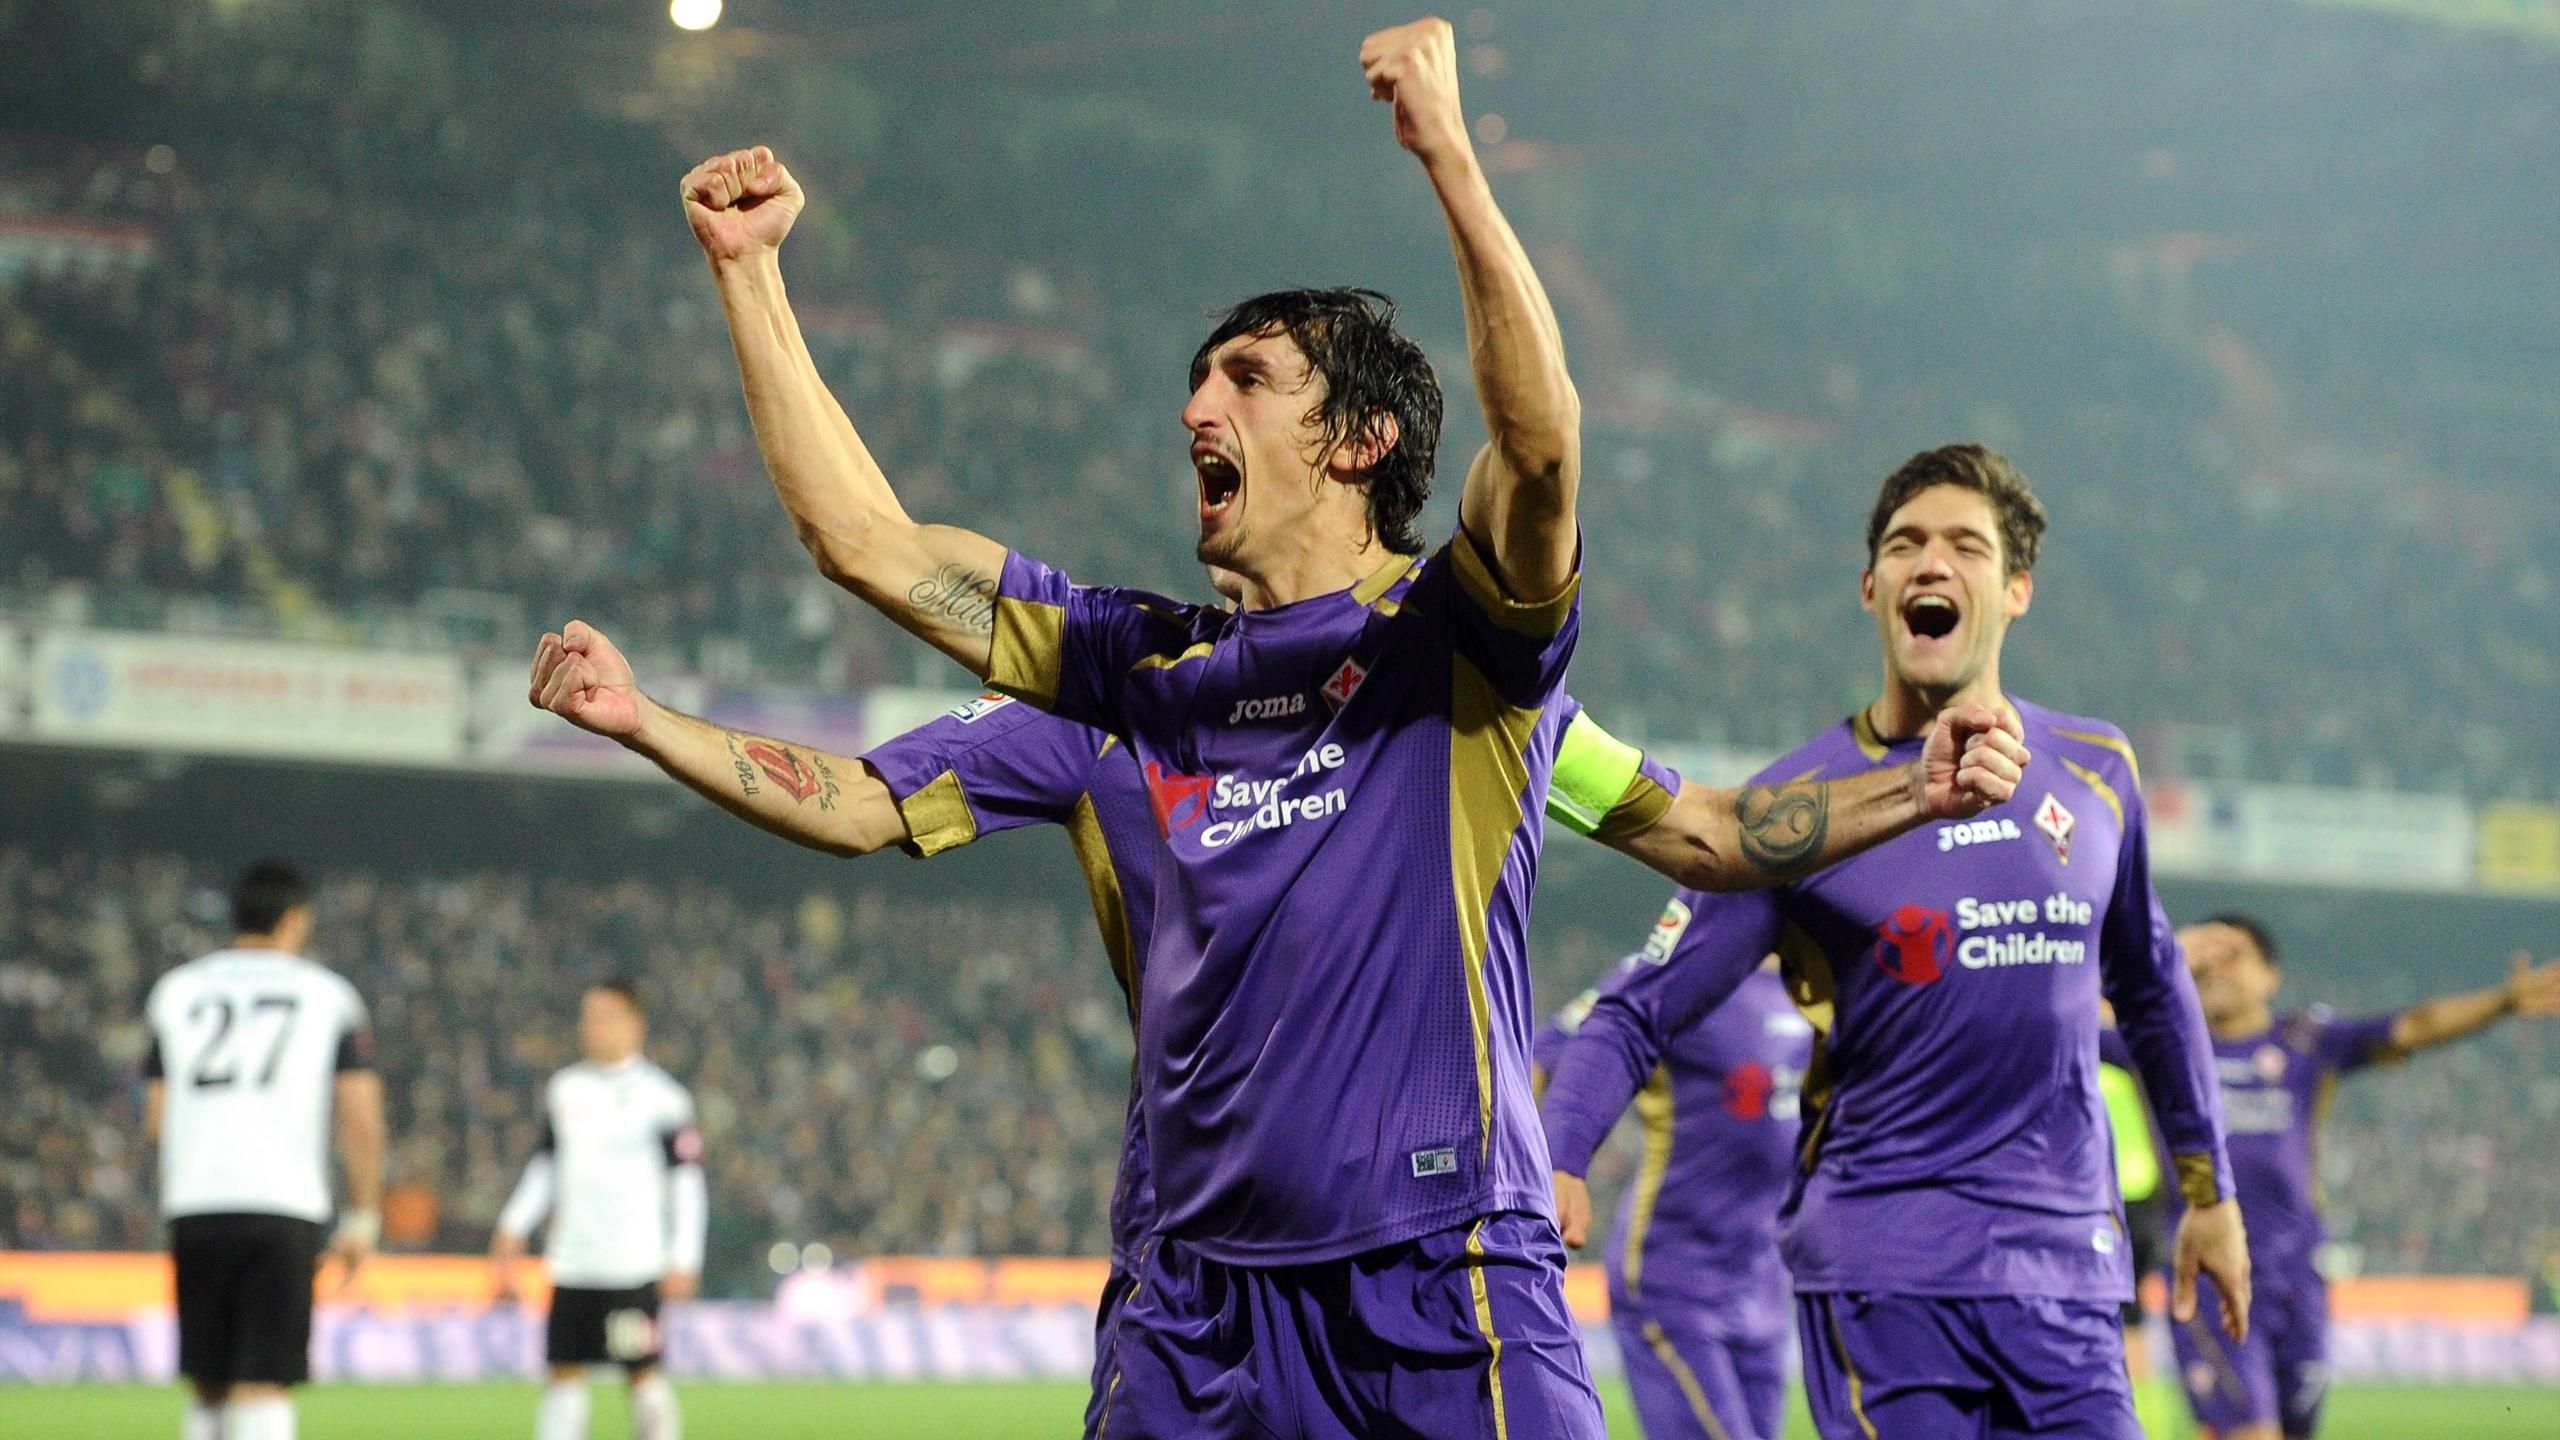 Stevan Savic renews with Fiorentina